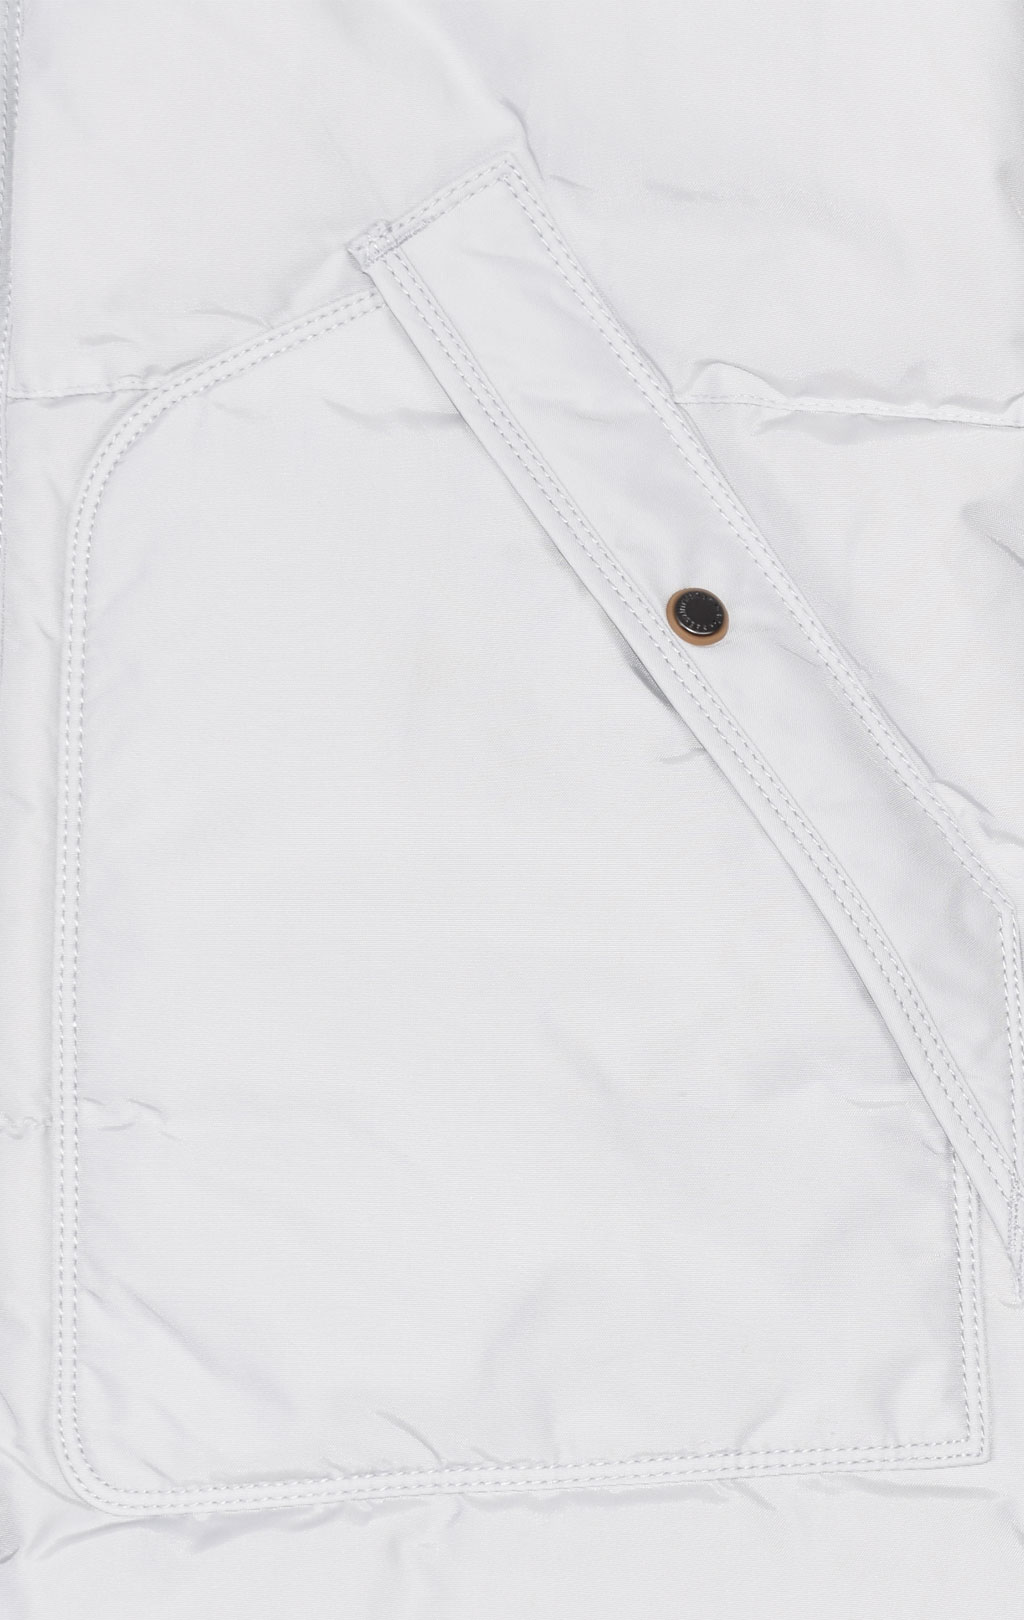 Женская куртка-пуховик PARAJUMPERS LONG BEAR FW 21/22 mist white 